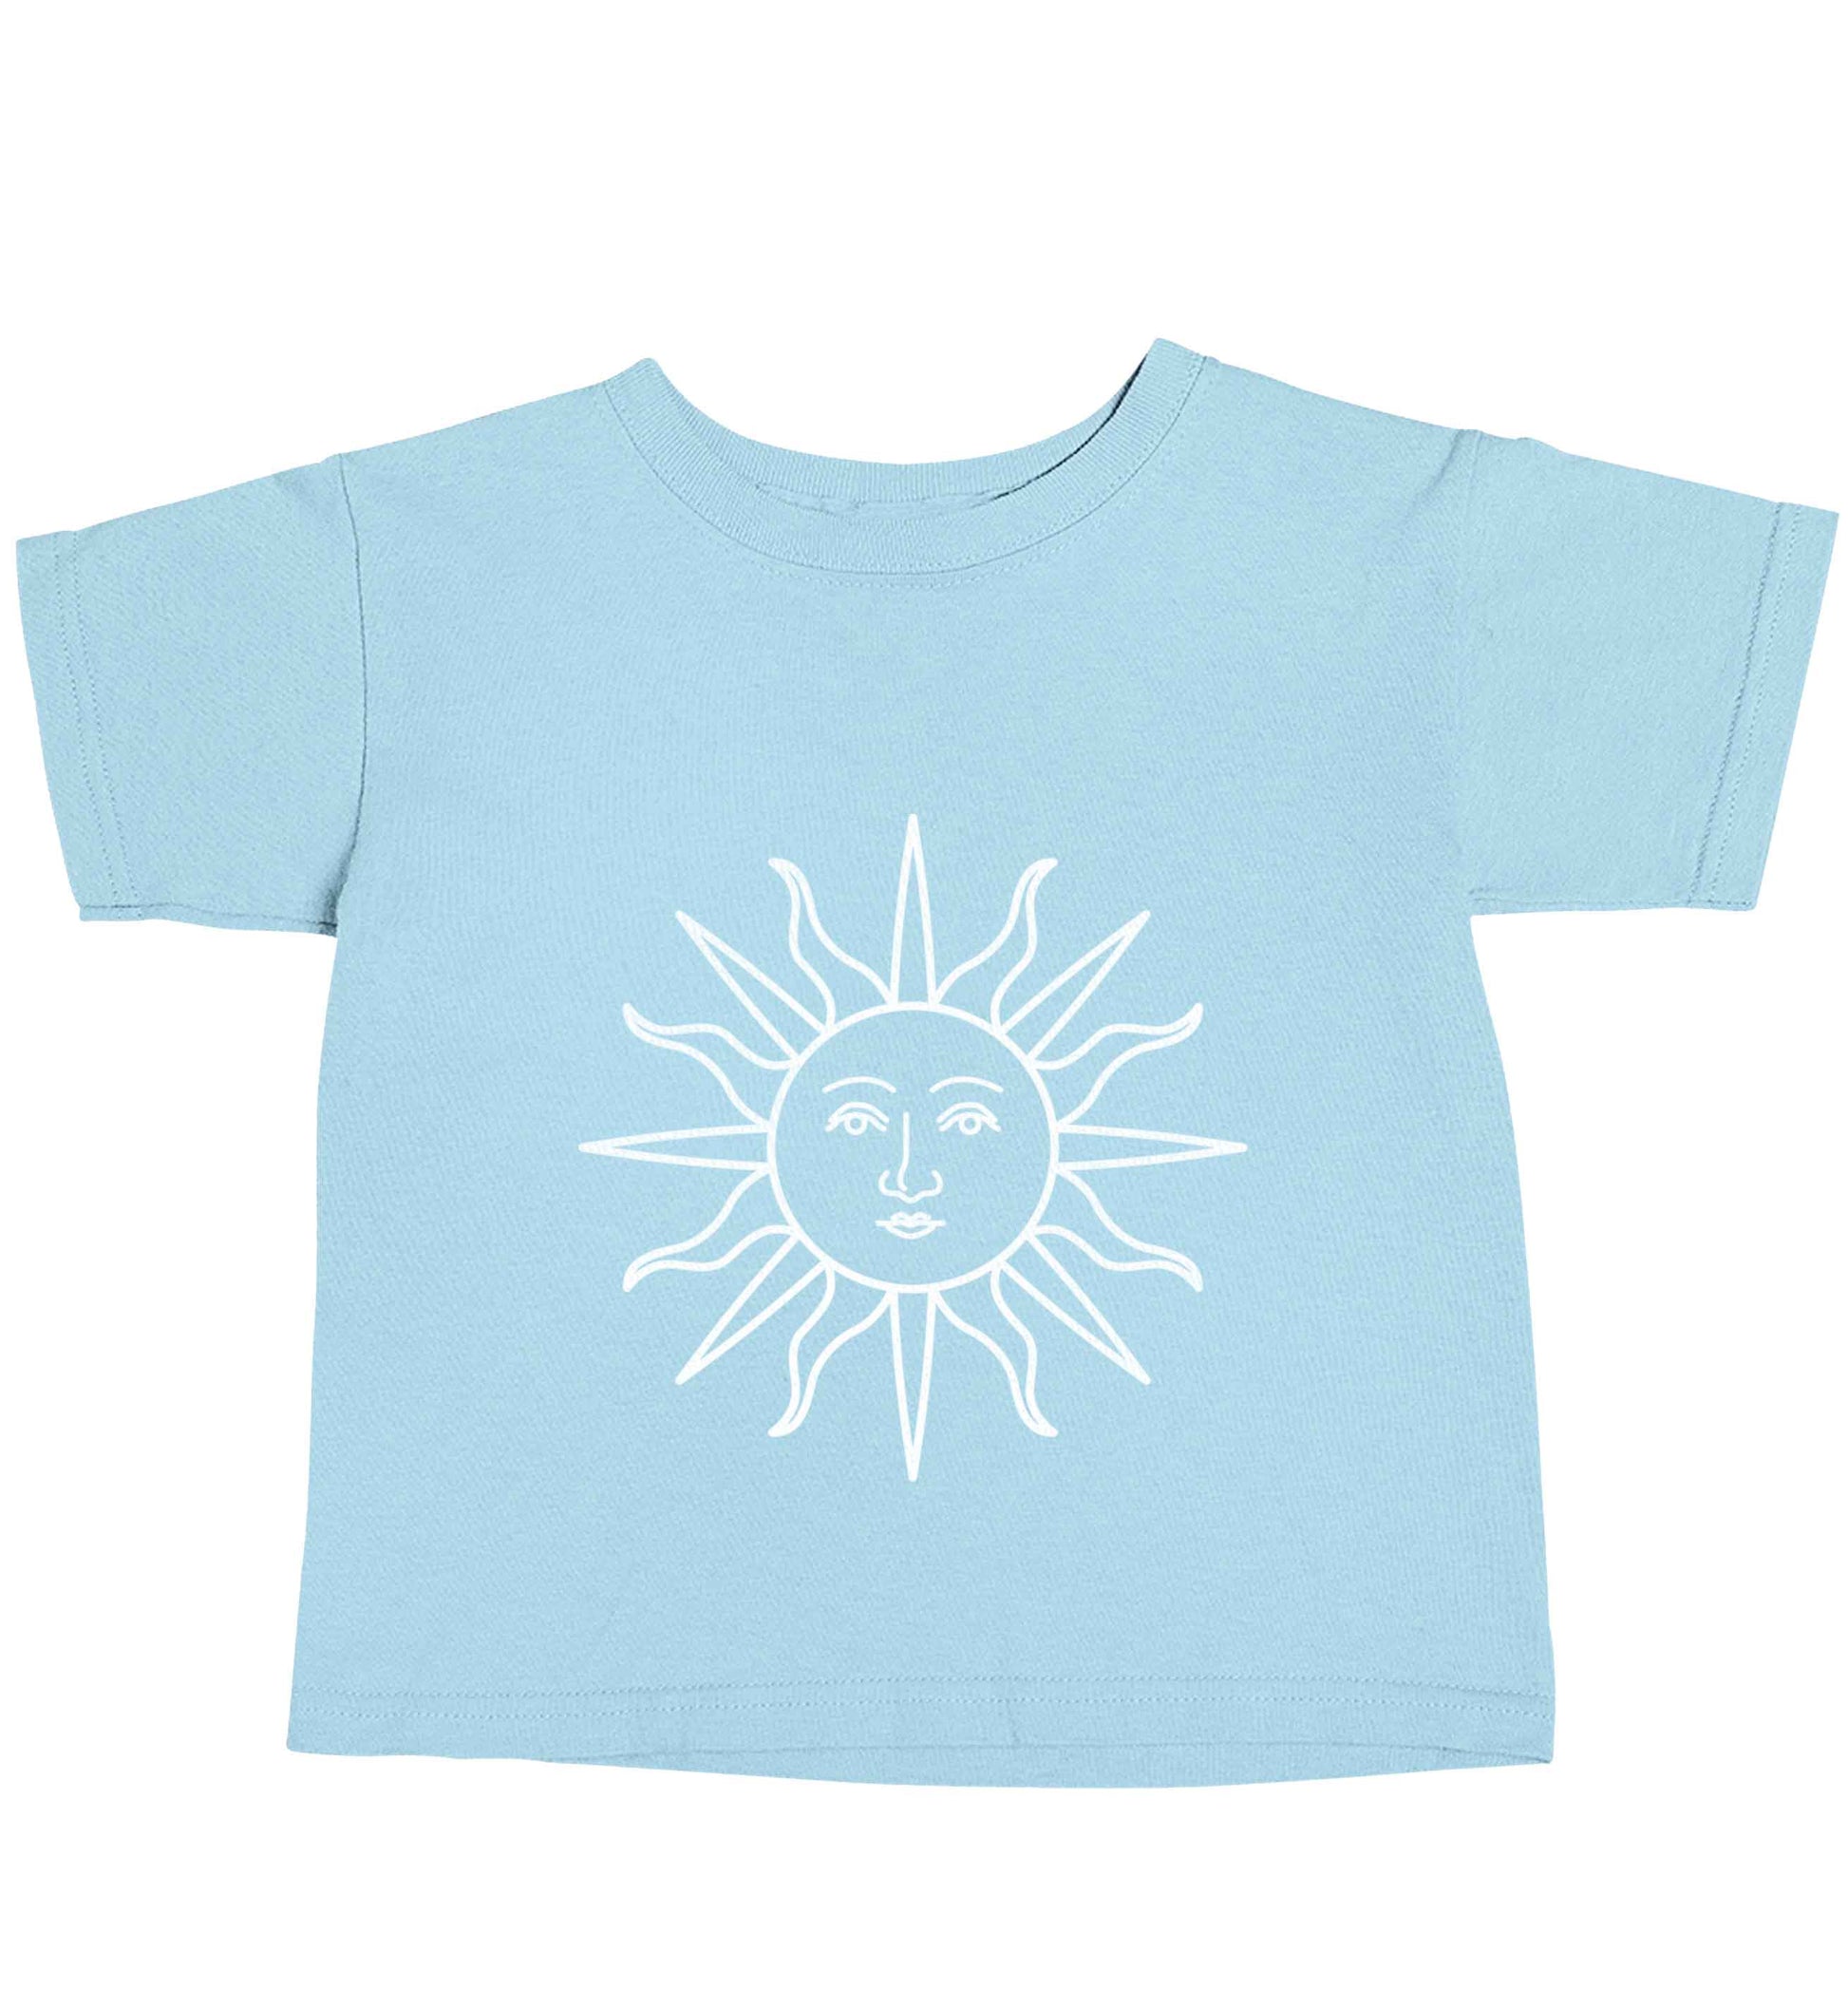 Sun face illustration light blue baby toddler Tshirt 2 Years